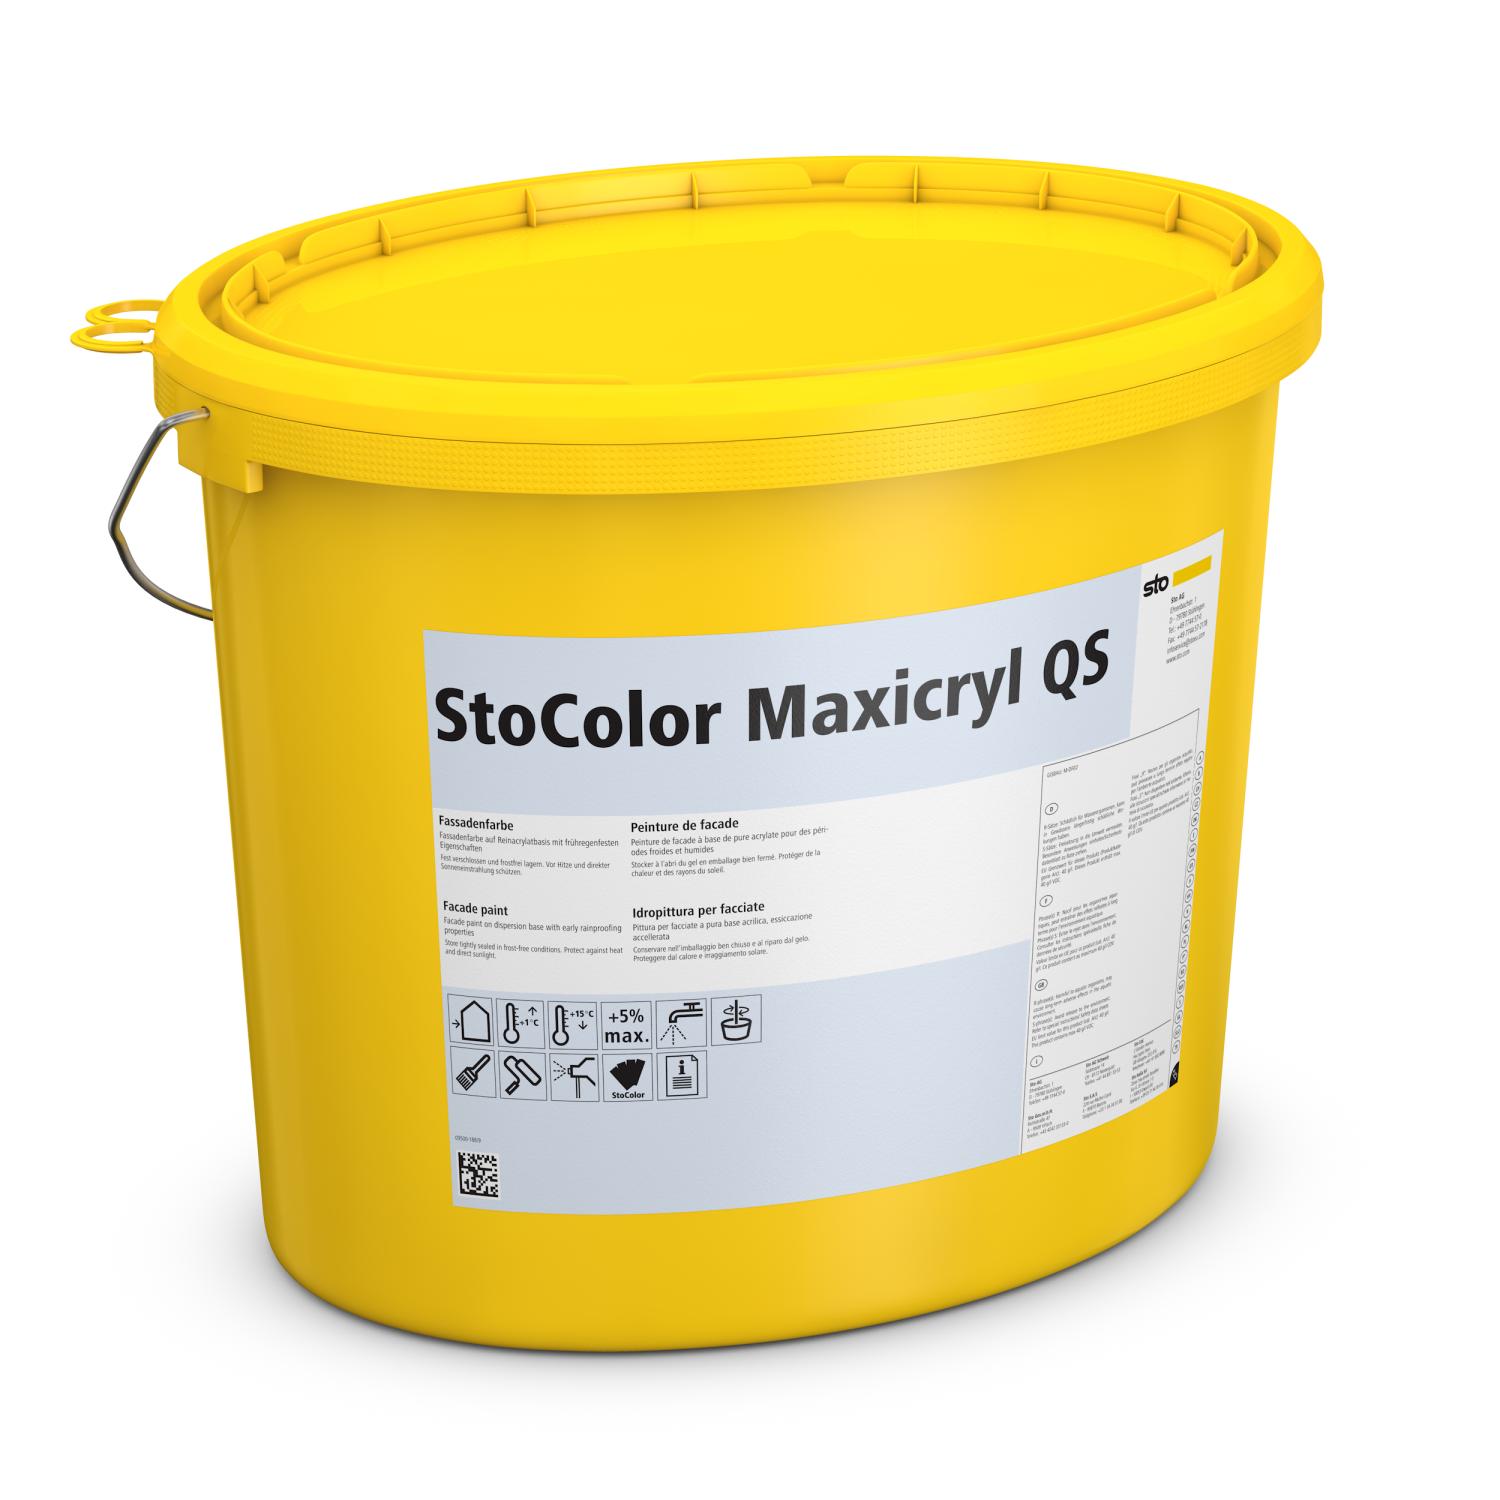 StoColor Maxicryl QS